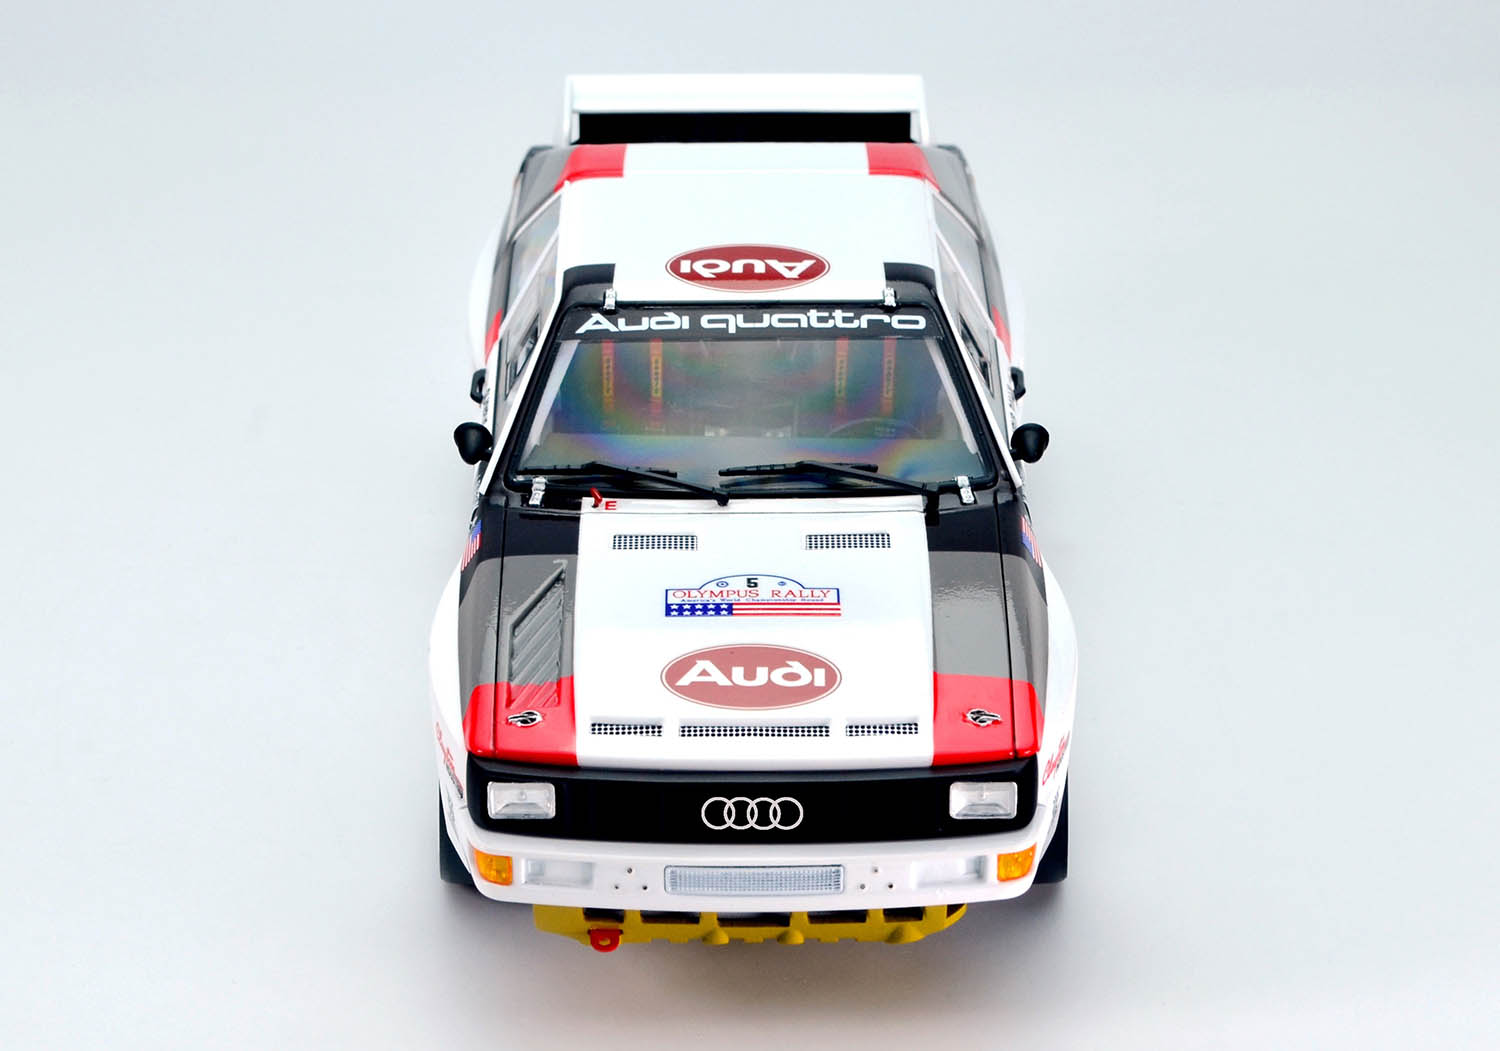 PLATZ / NUNU 1/24 Audi Sport Quattro S1 ‘86 US Olympus Rally